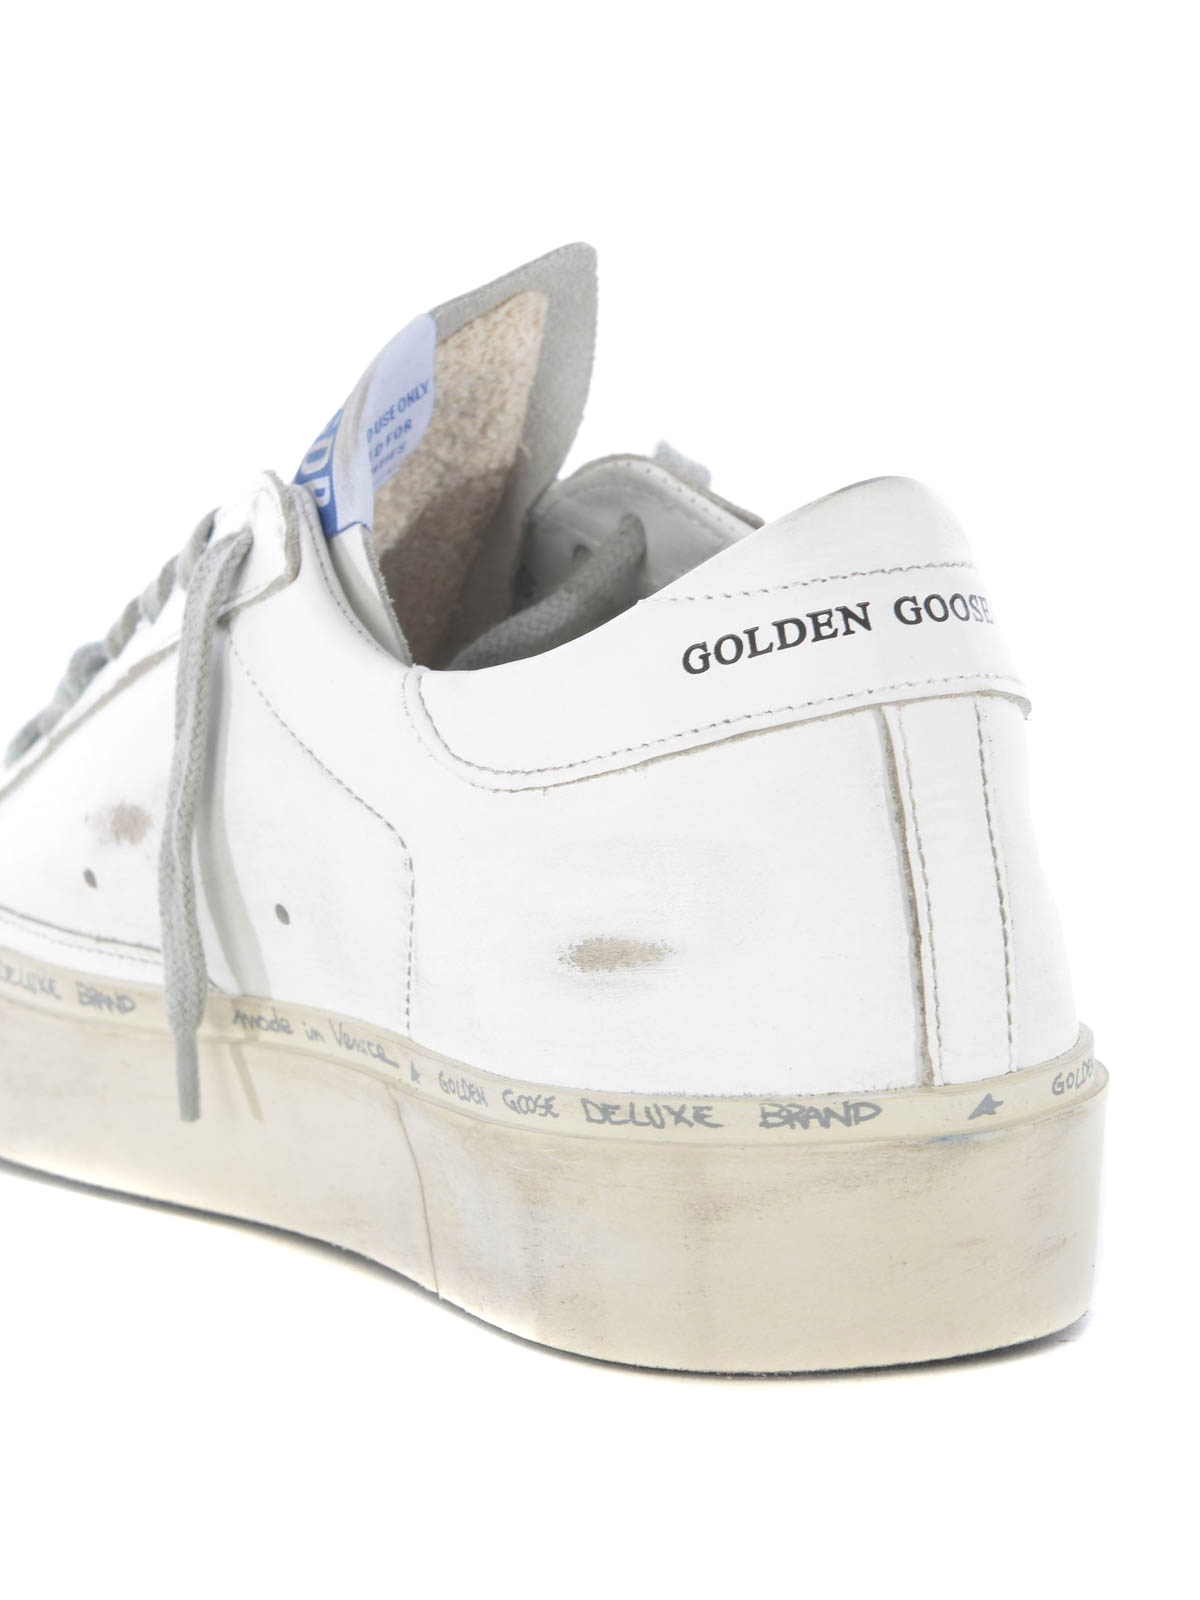 Buy > golden goose hi star white and gold > in stock